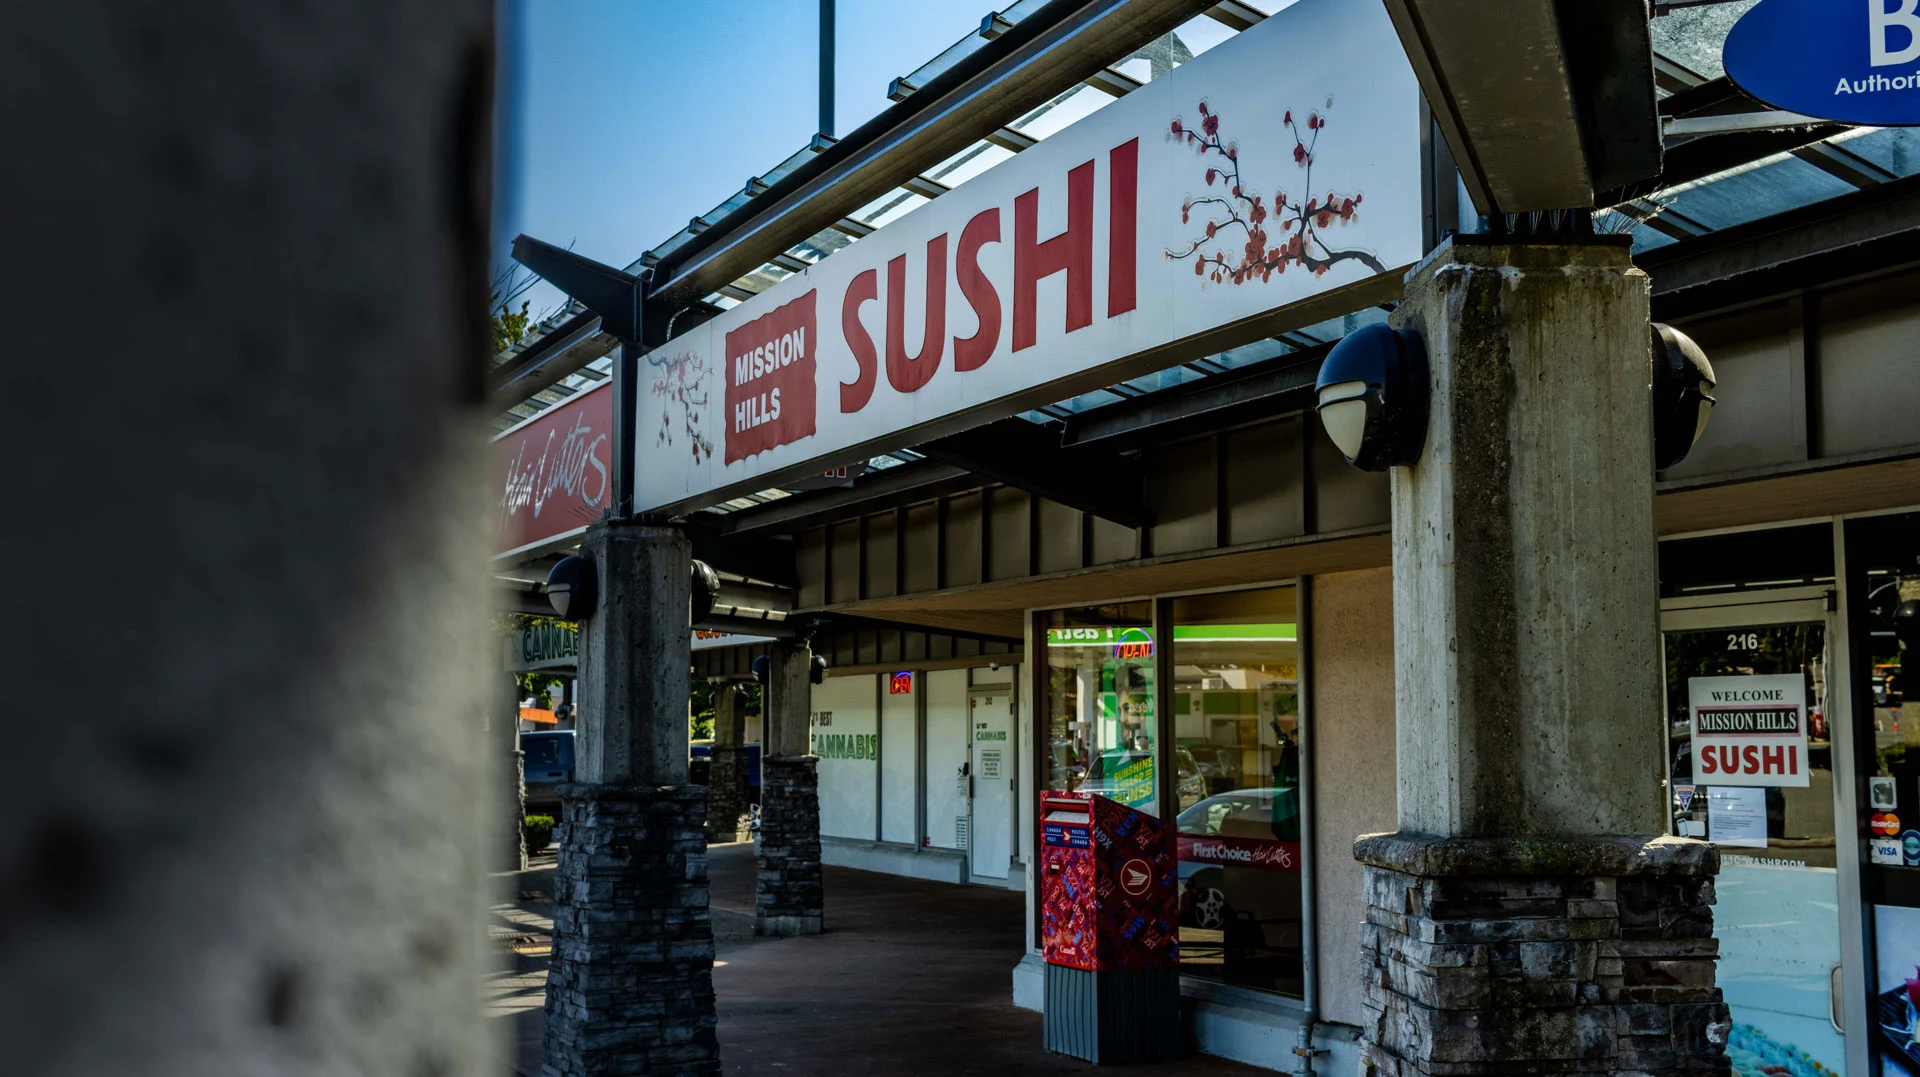 Sushi Mission